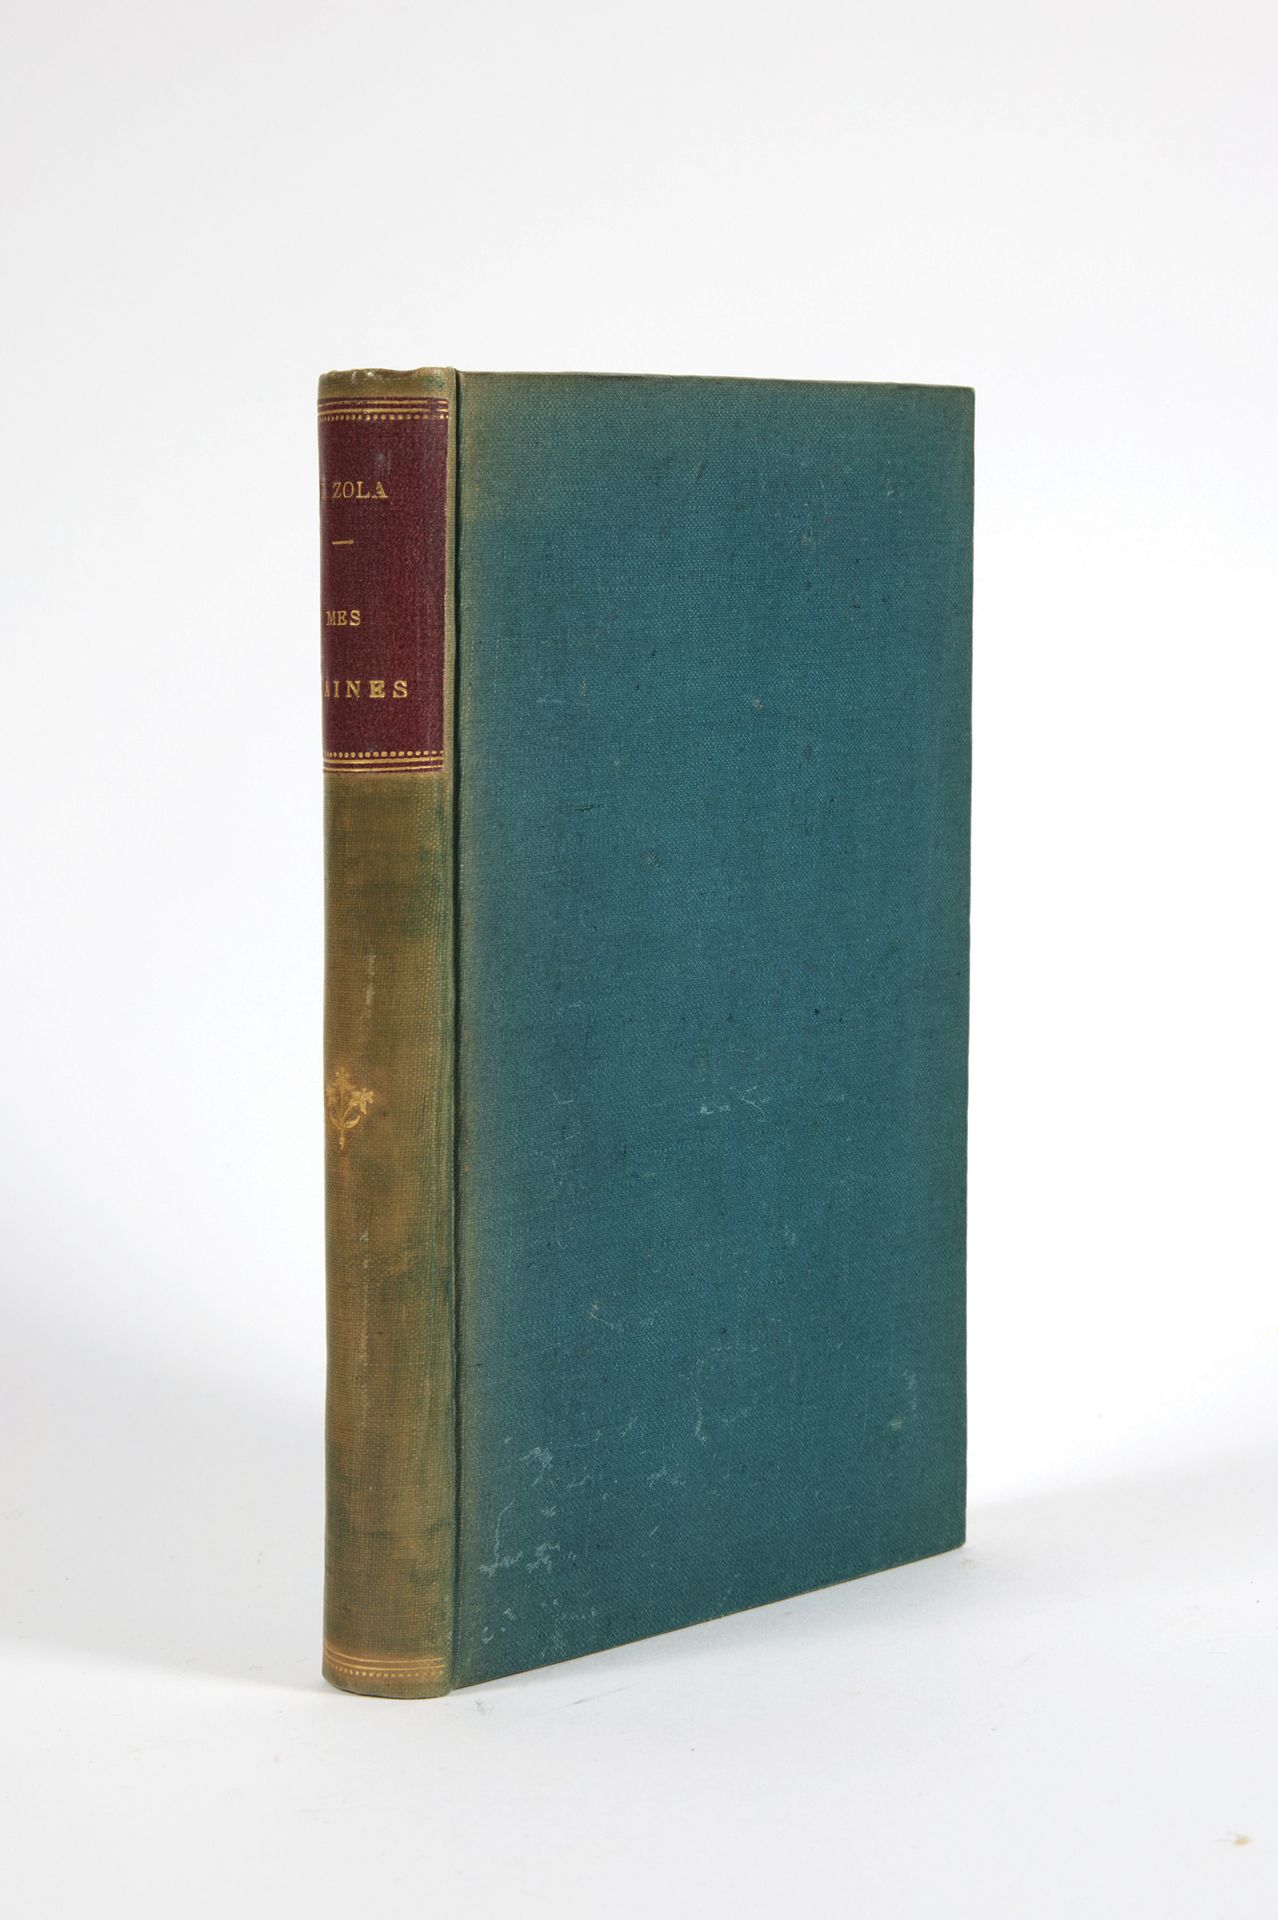 ZOLA, Emile. 我的恨意。文学和艺术讲座。我的沙龙》（1866年）。爱德华-马奈，一个传记

传记和批评研究。新版。巴黎，G. Charpentier&hellip;